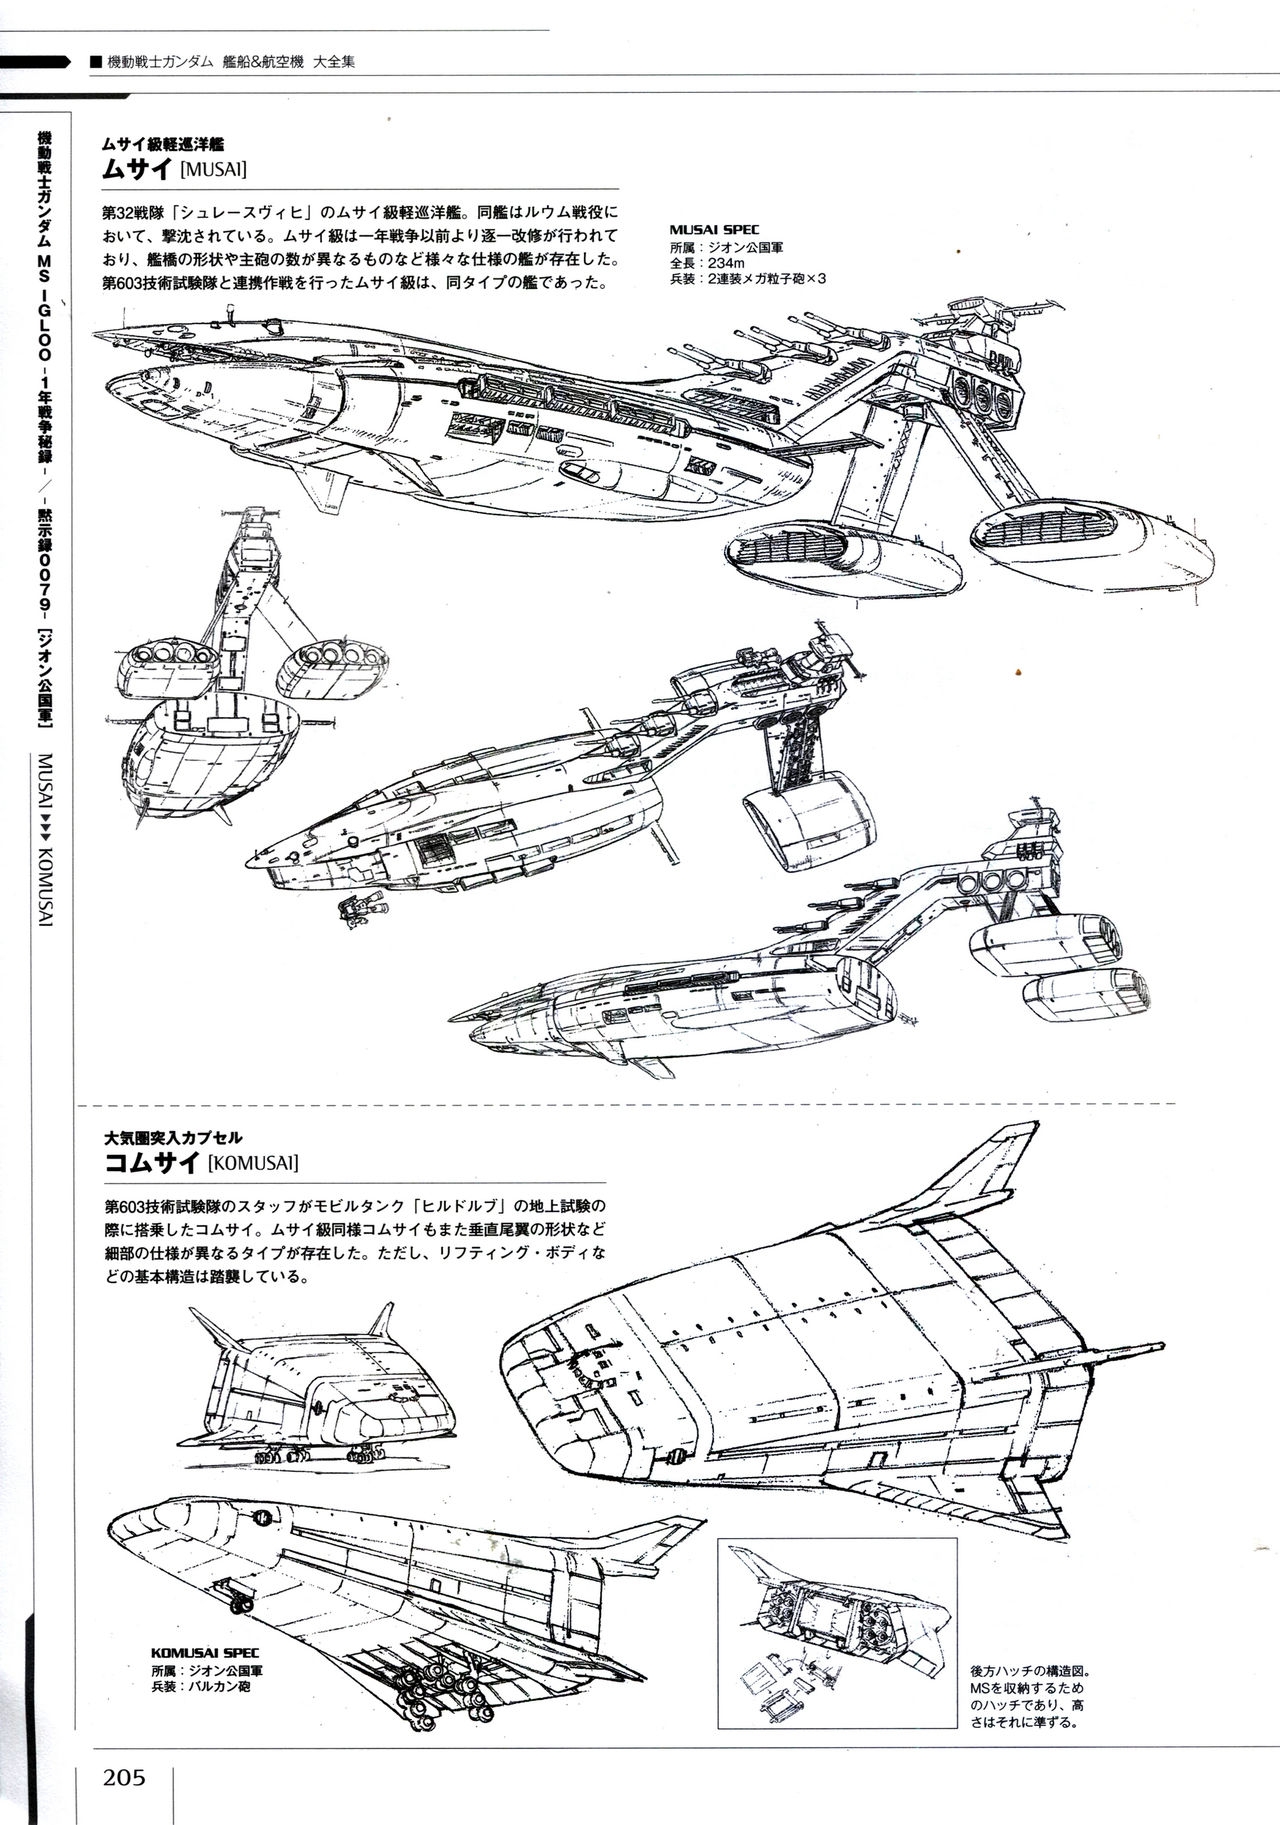 Mobile Suit Gundam - Ship & Aerospace Plane Encyclopedia - Revised Edition 210